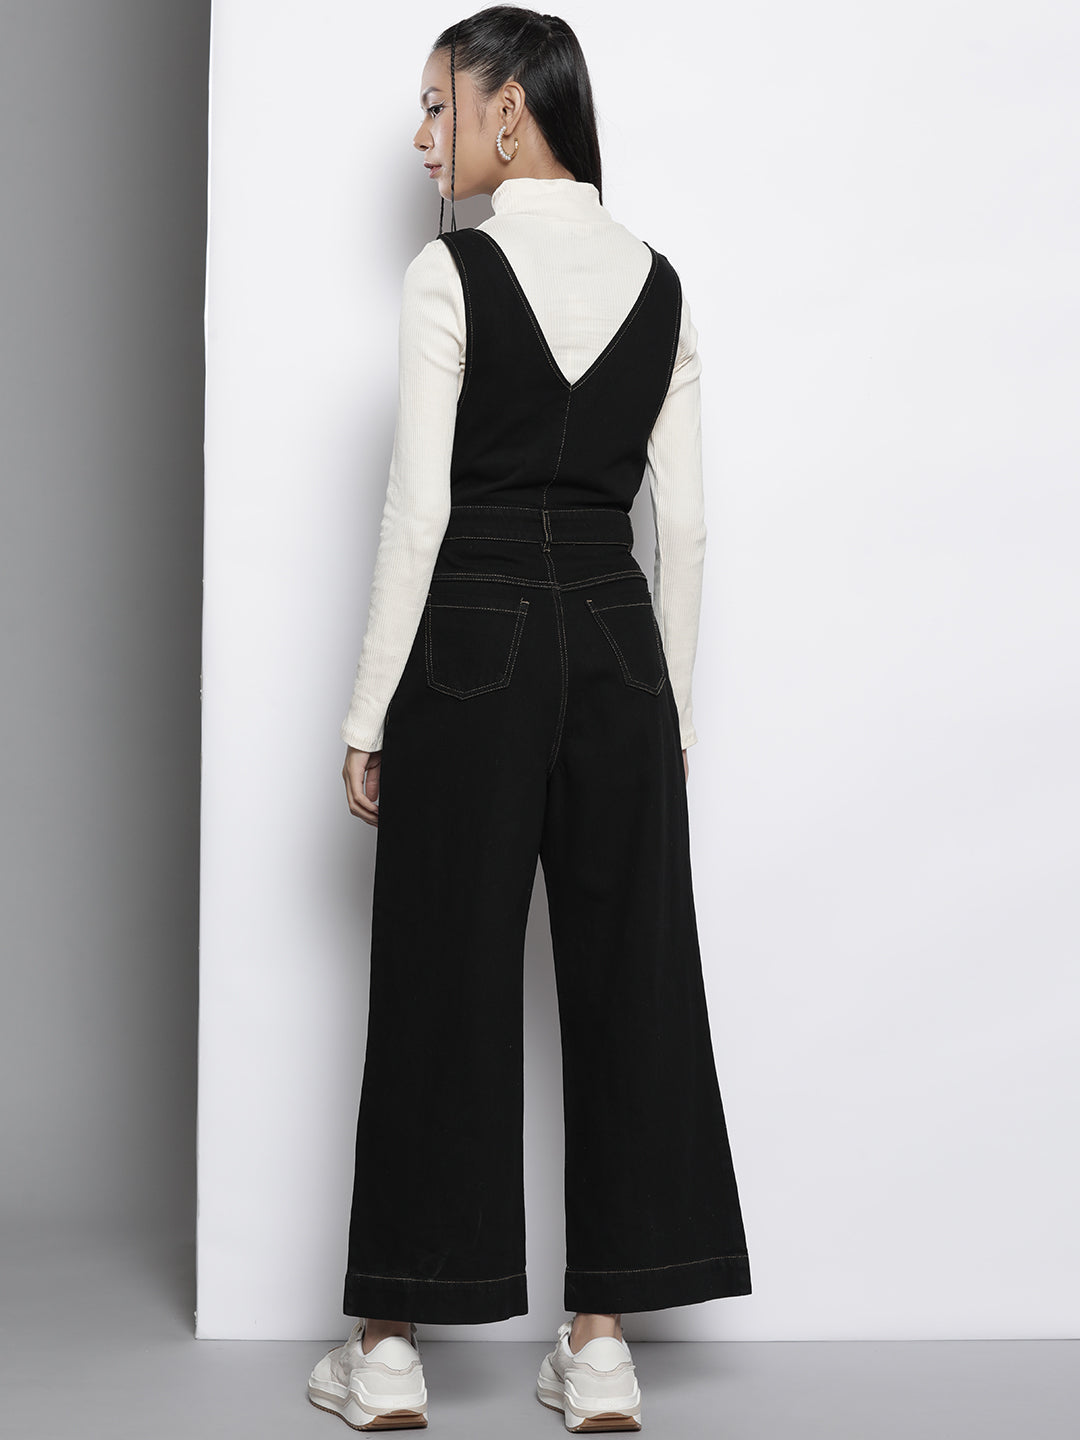 Topshop Black Denim Jumpsuit- Size 2 – The Saved Collection